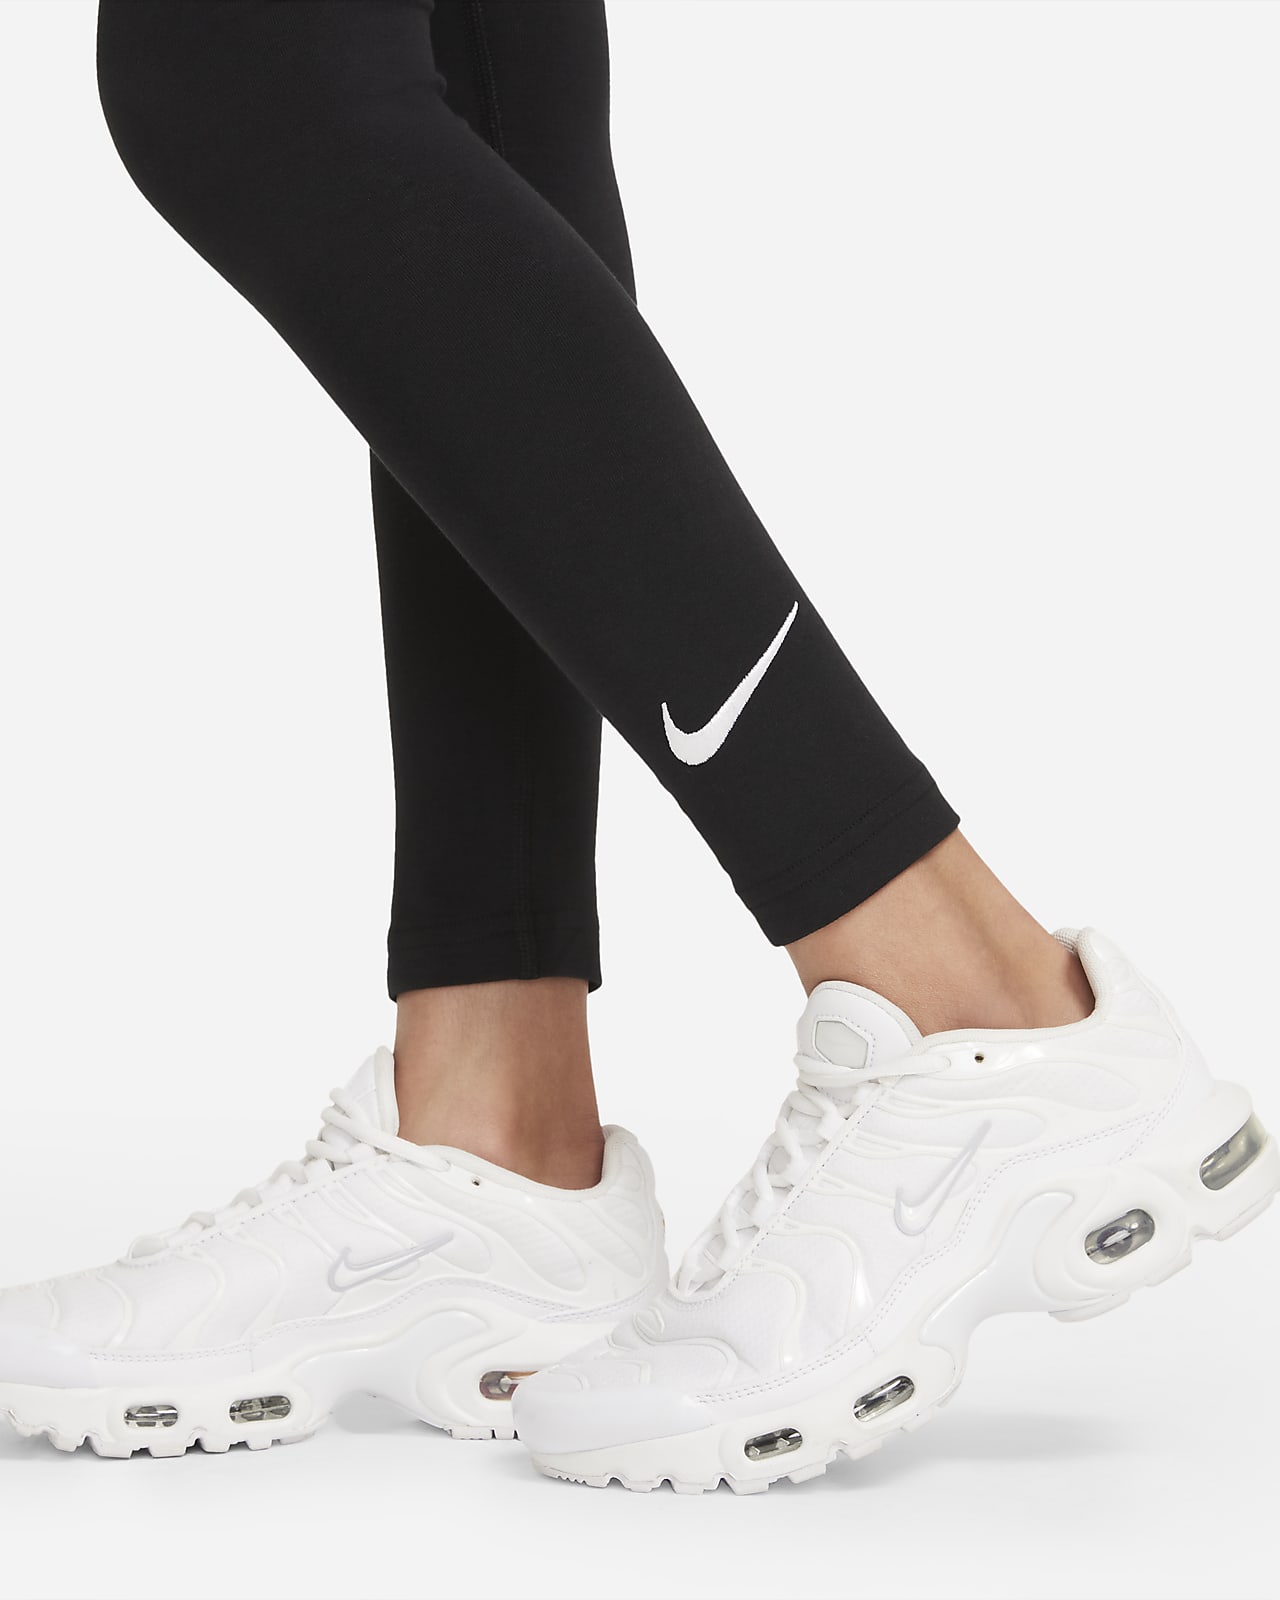 Nike Sportswear Favourites Older Kids' (Girls') Swoosh Leggings. Nike LU